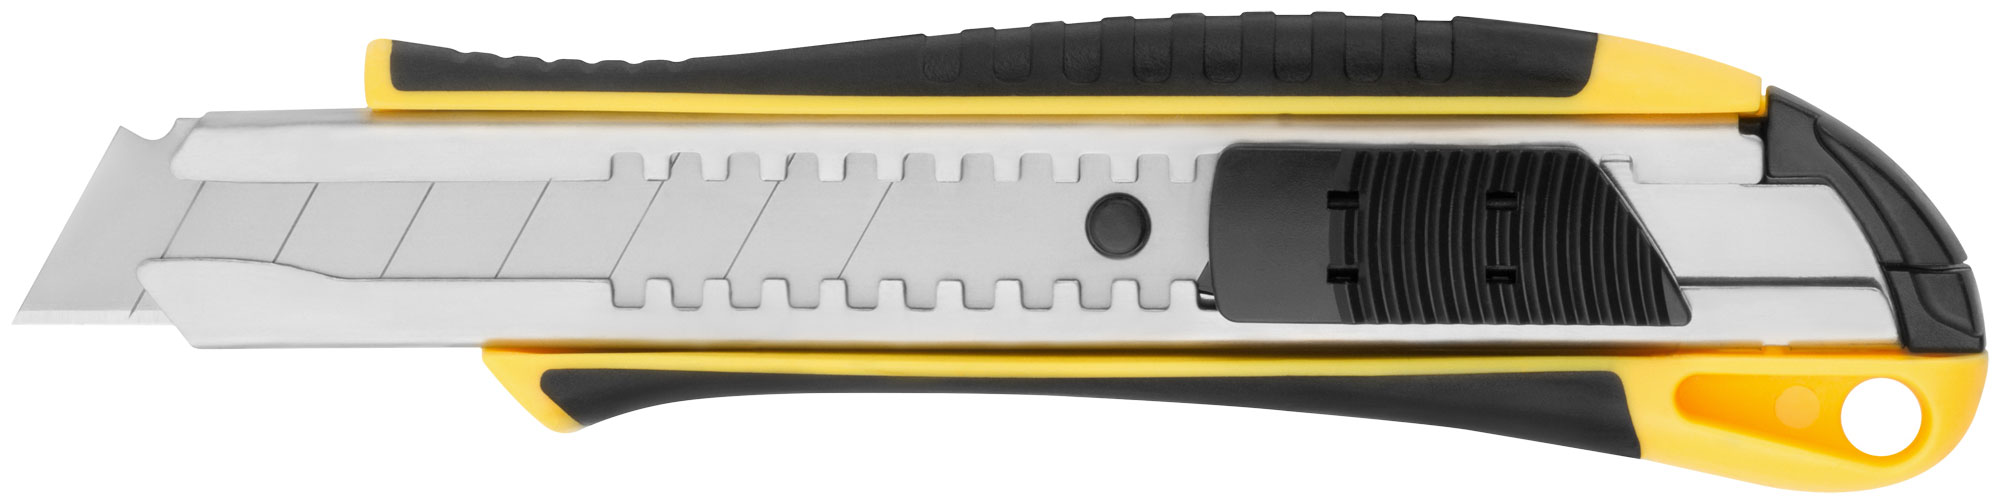 FIT IT  Нож технический 18 мм усиленный прорезиненный, 2-х сторонняя автофиксация нож технический курс стайл 10170 18 мм усиленный